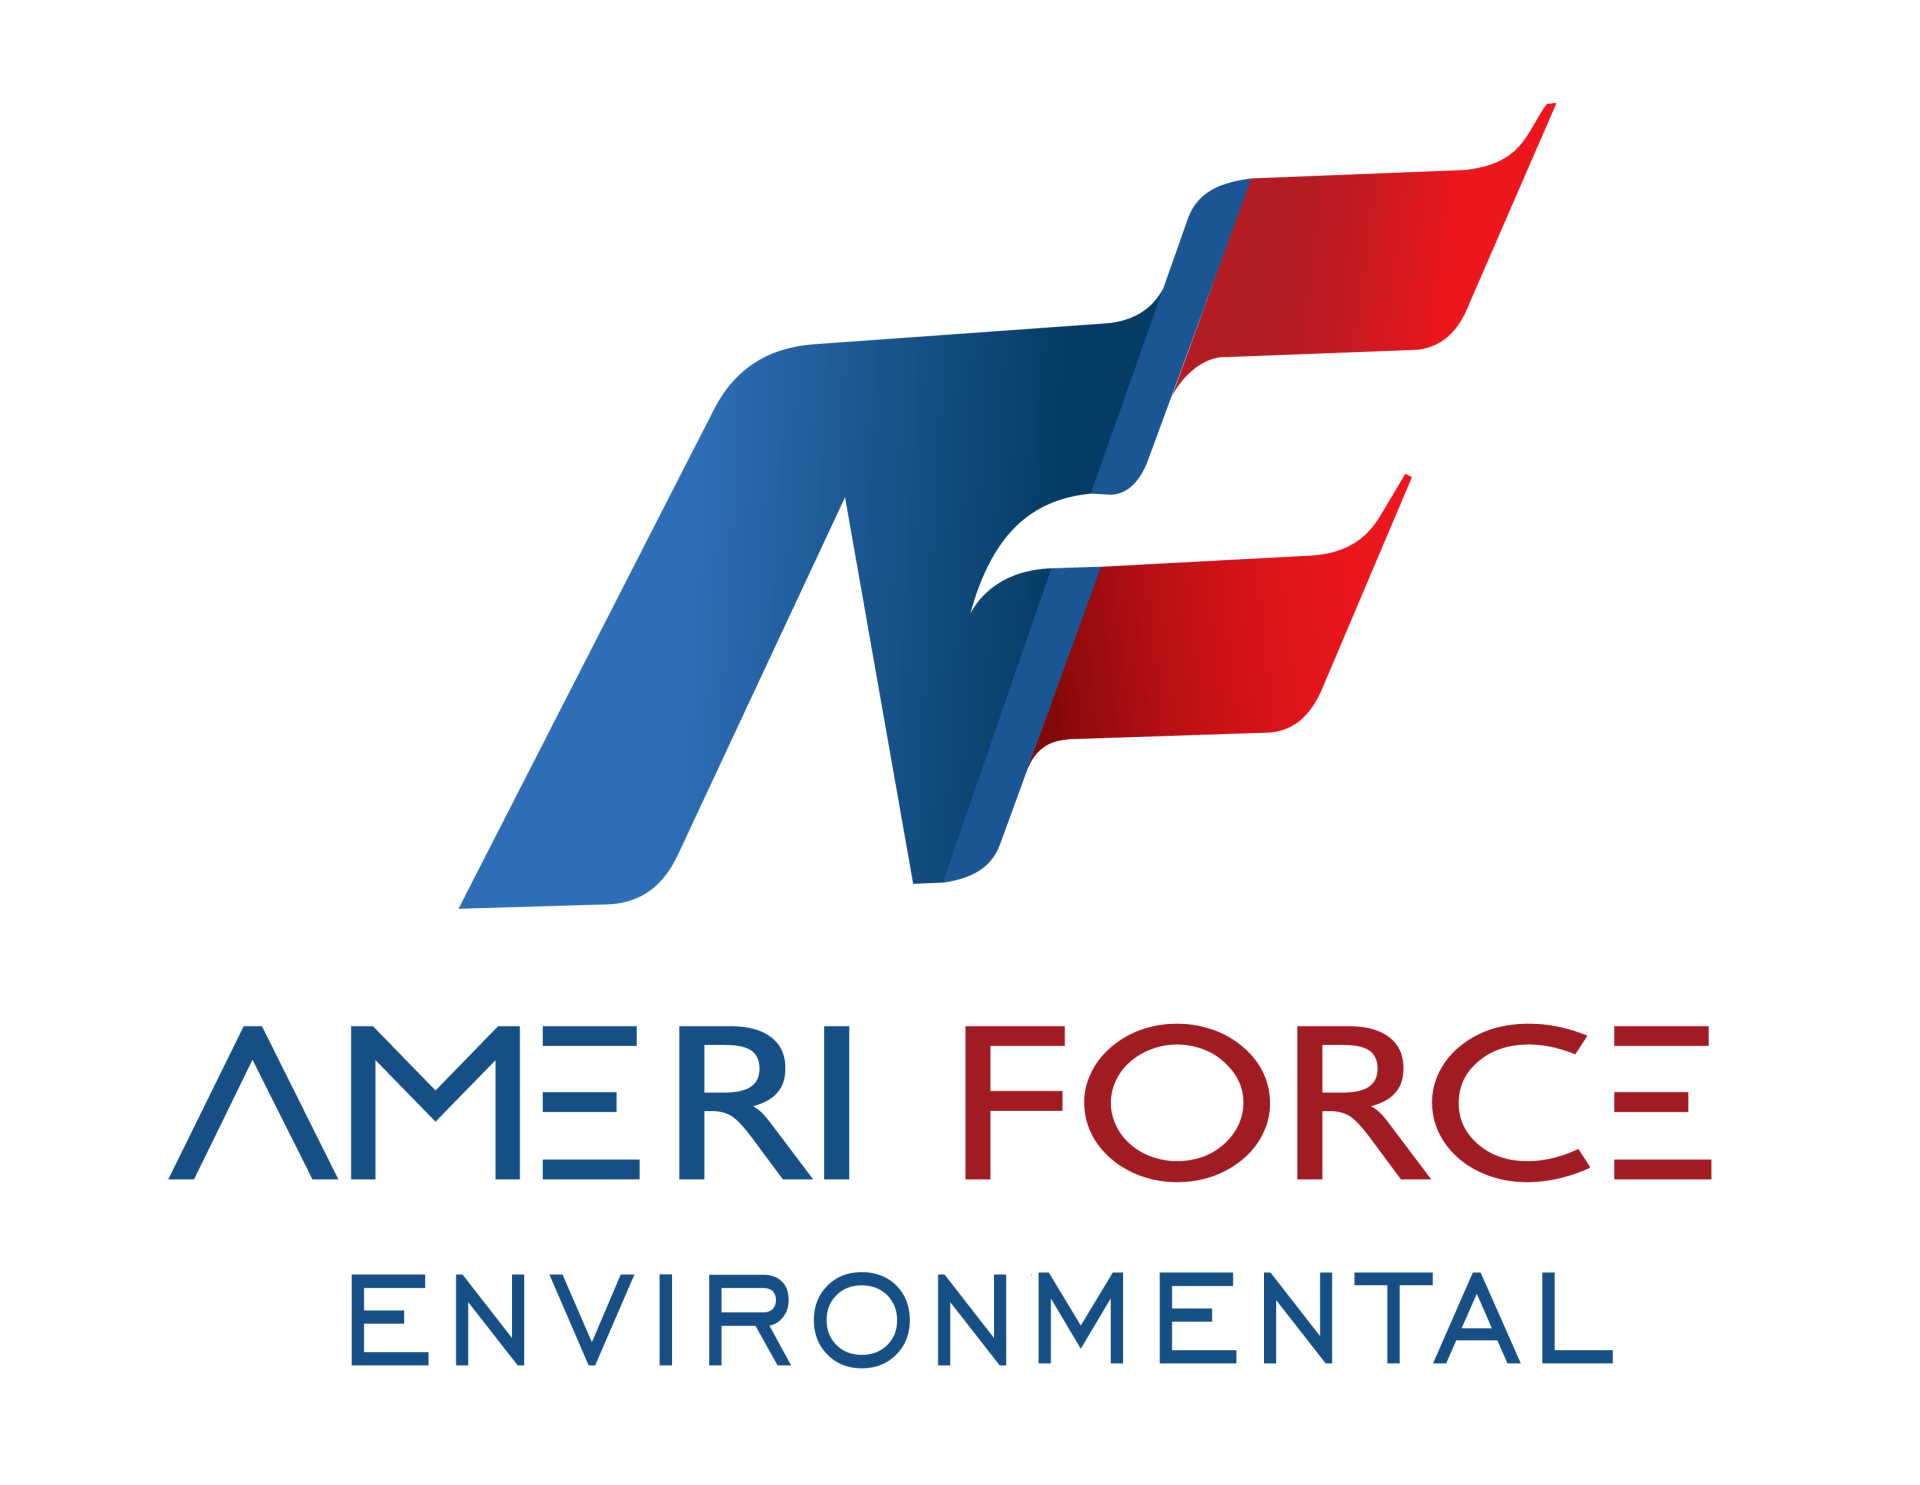 Asbestos Removal Service in Denver, CO | AmeriForce Environmental INC